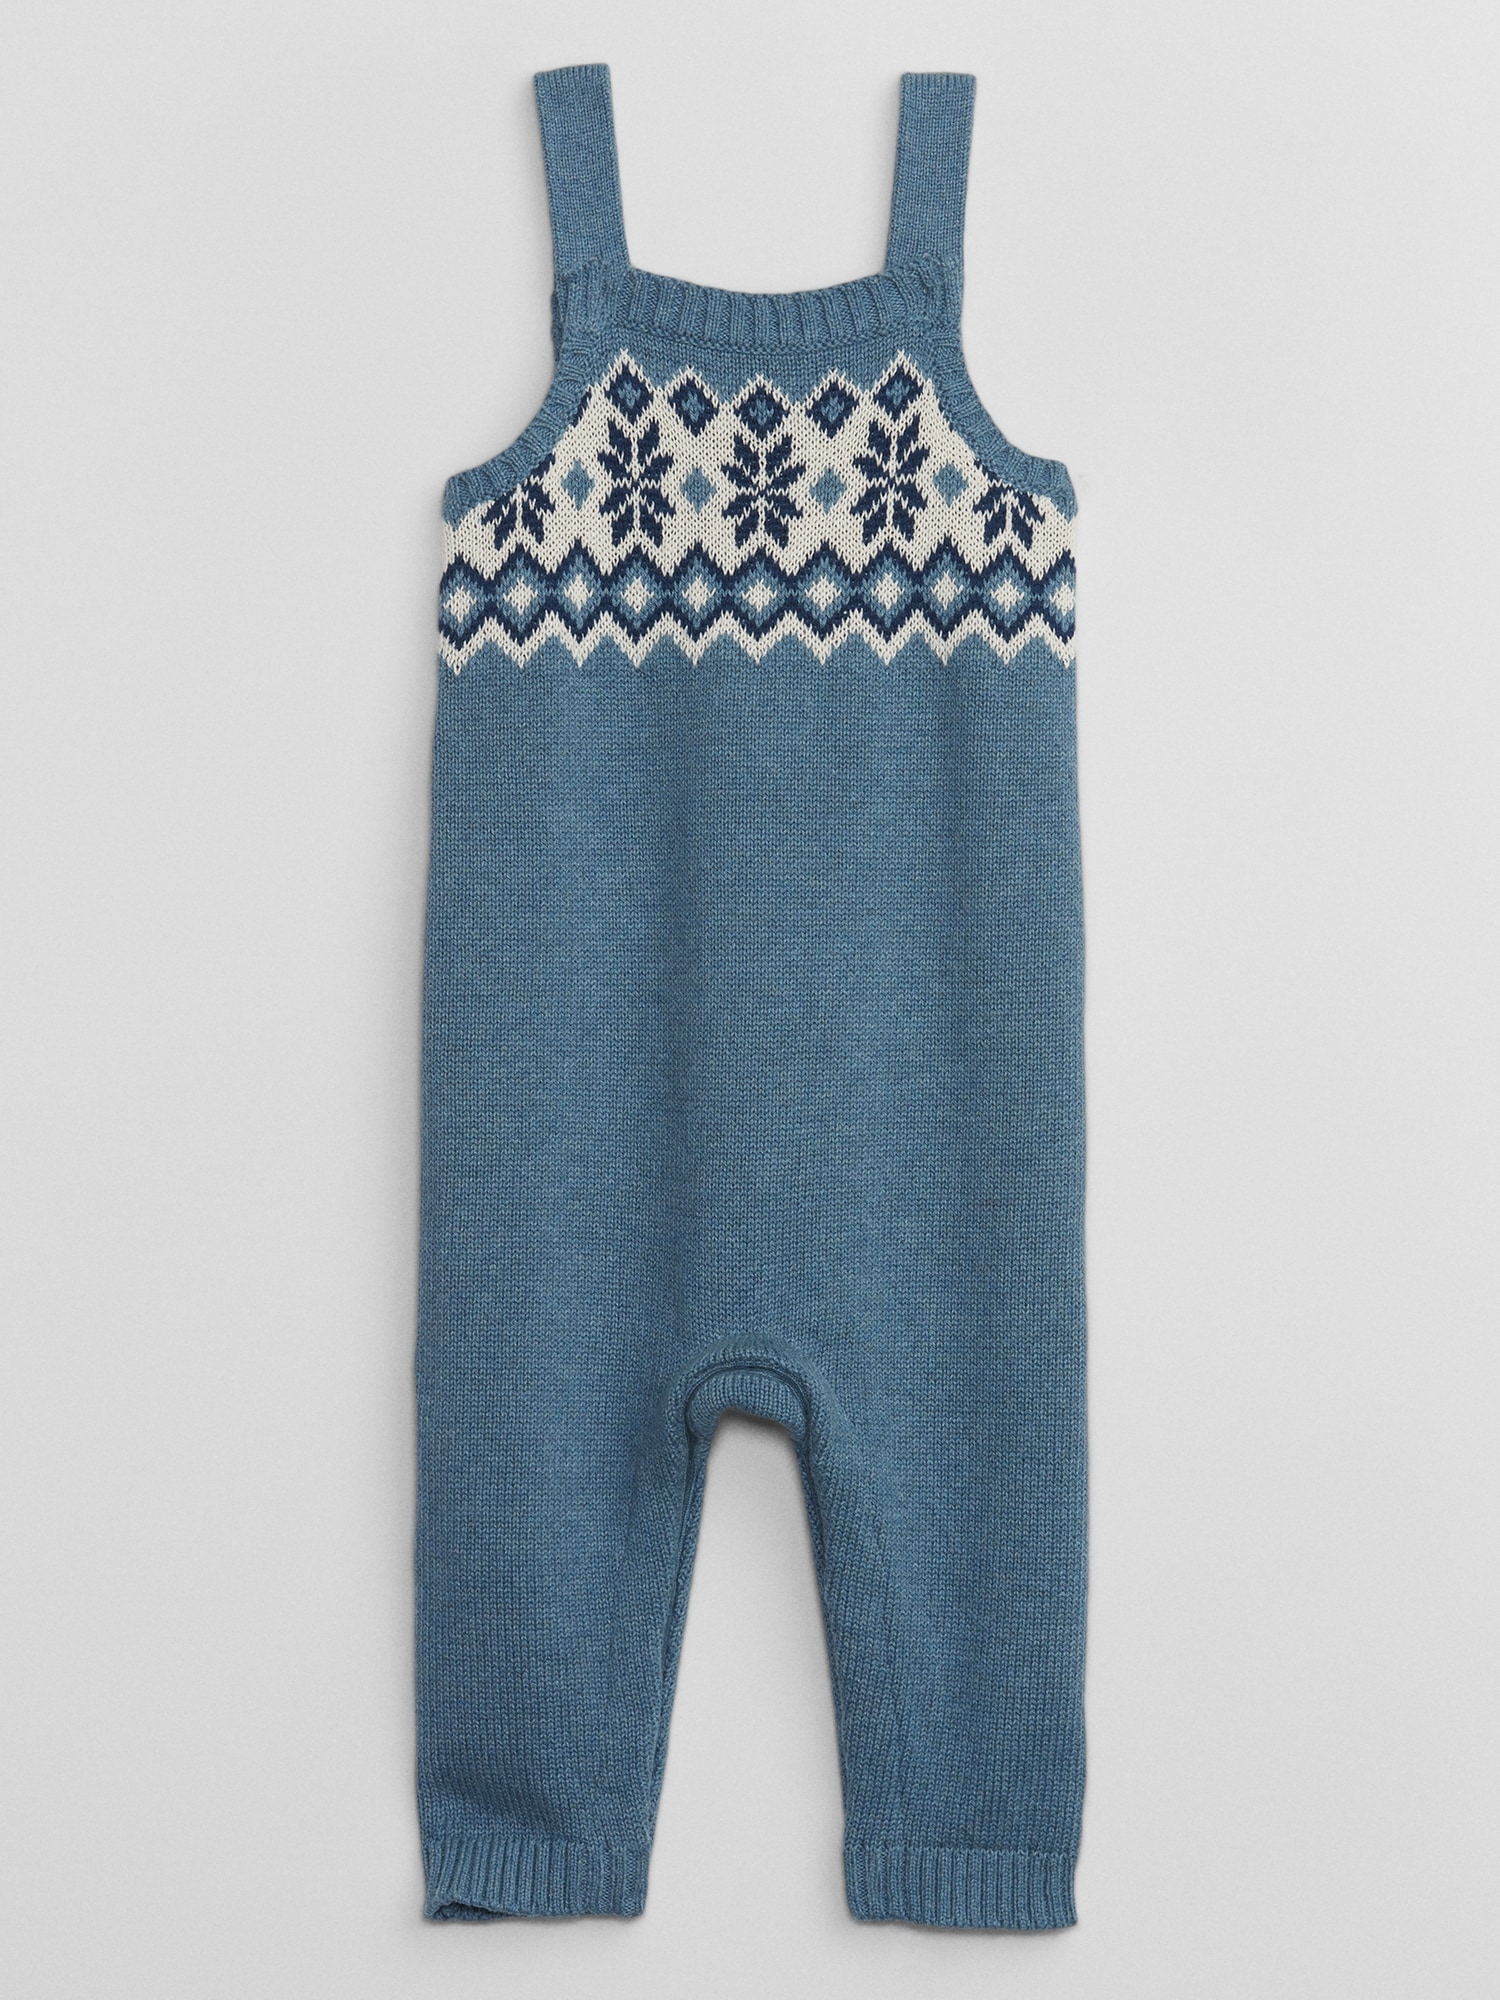 Baby Fair Isle Sweater Overalls